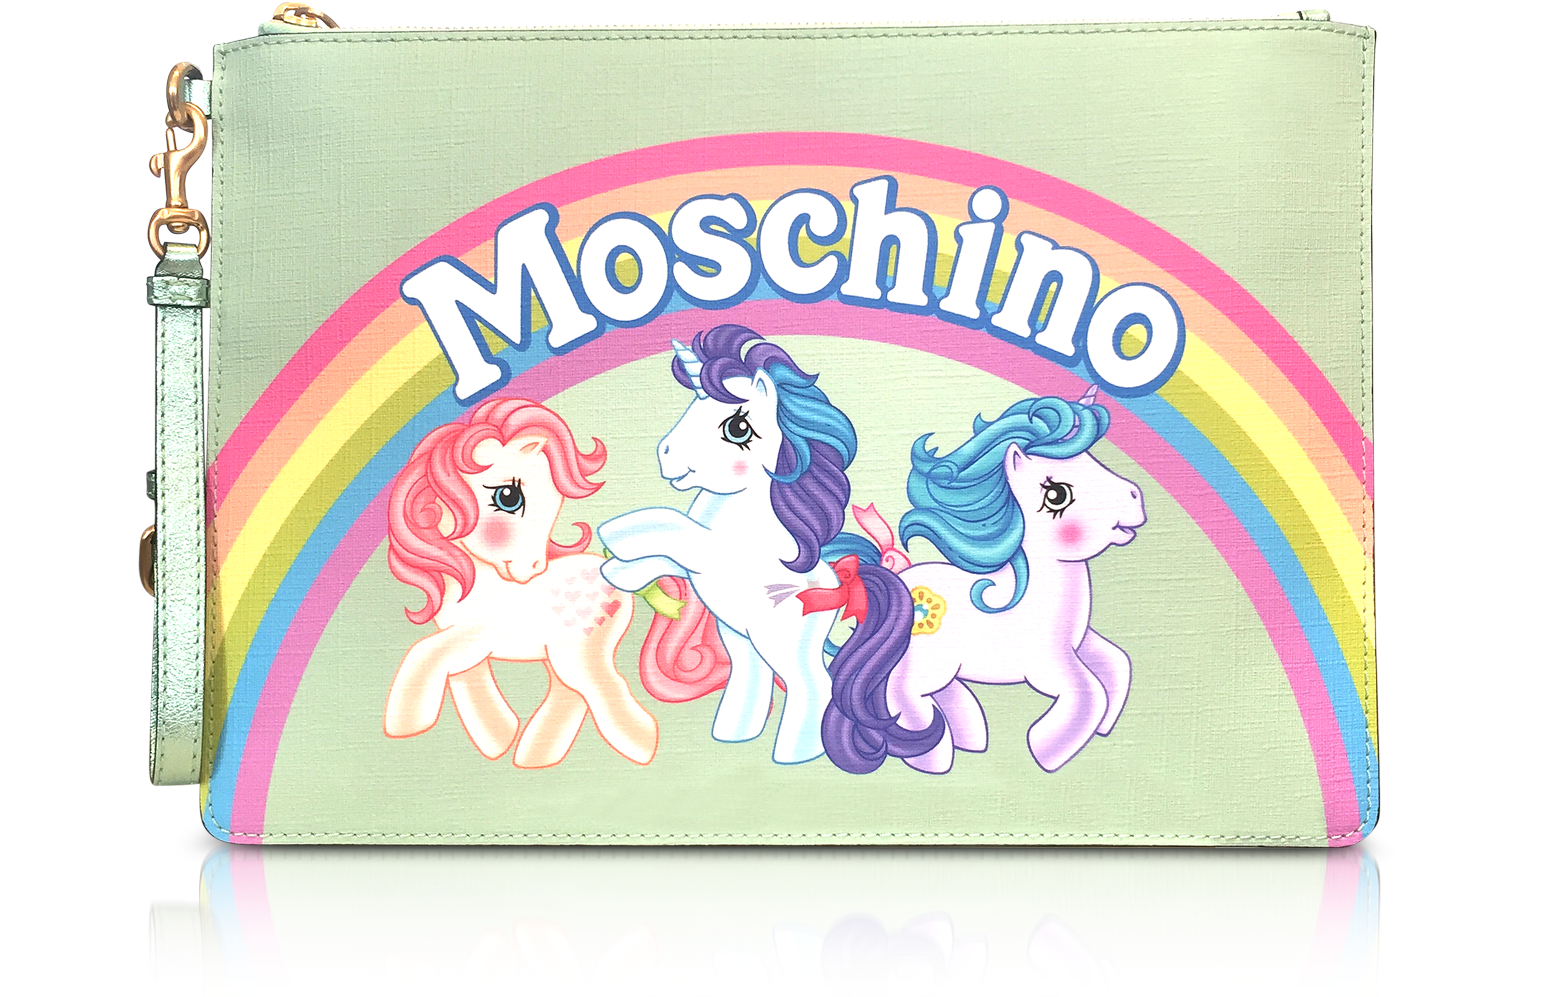 moschino little pony